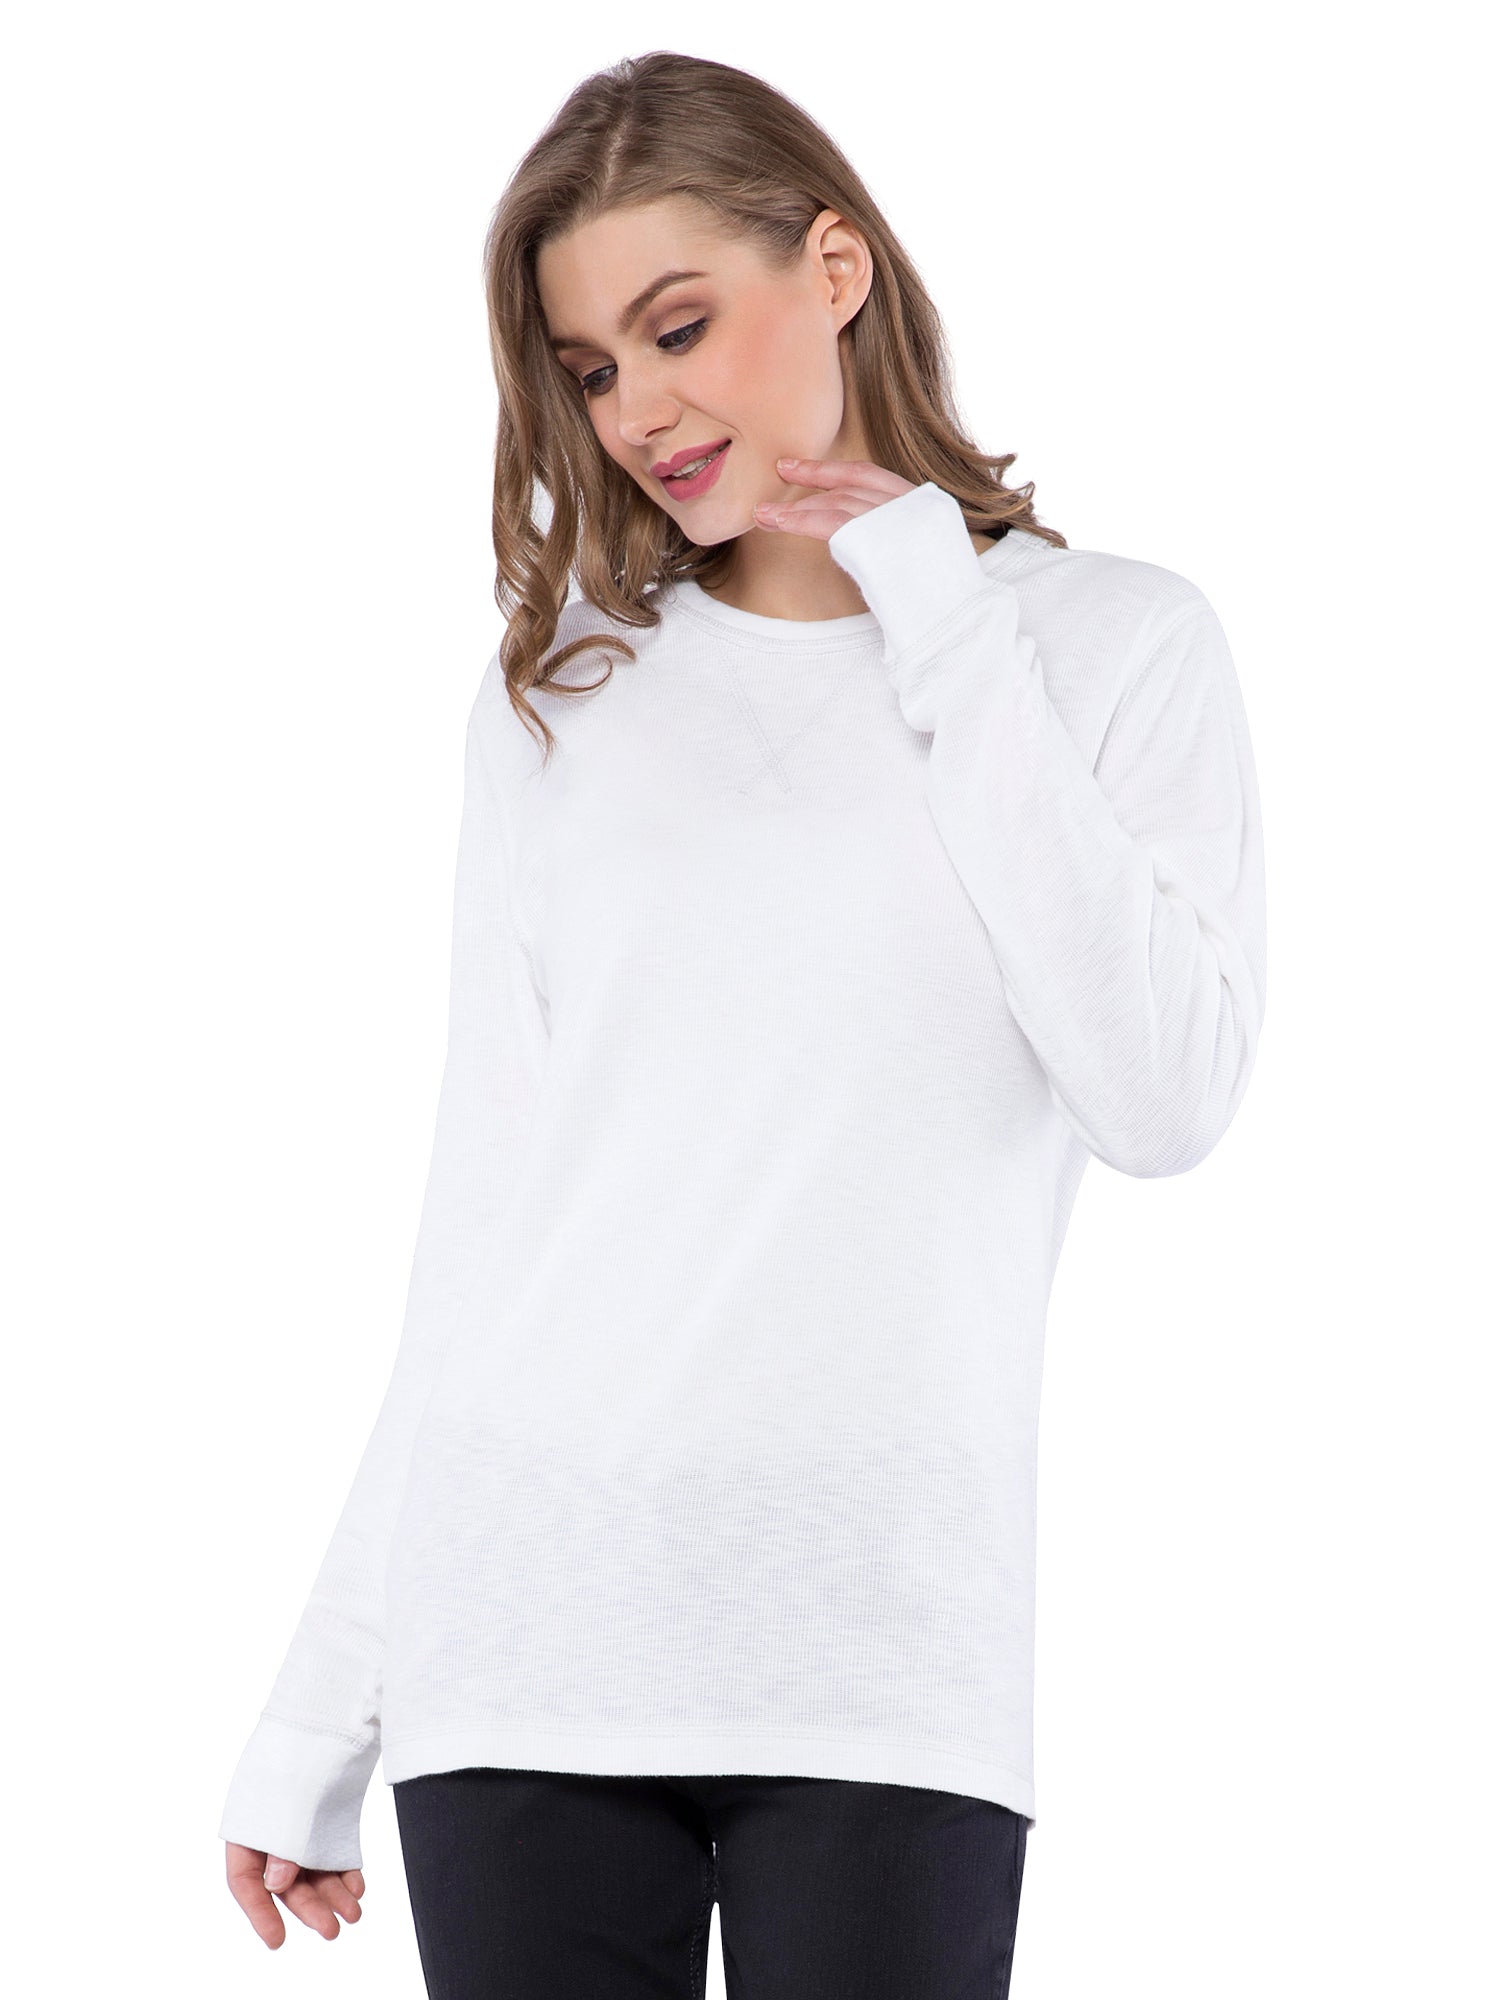 Aeropostale Women White Long Sleeves T-Shirt